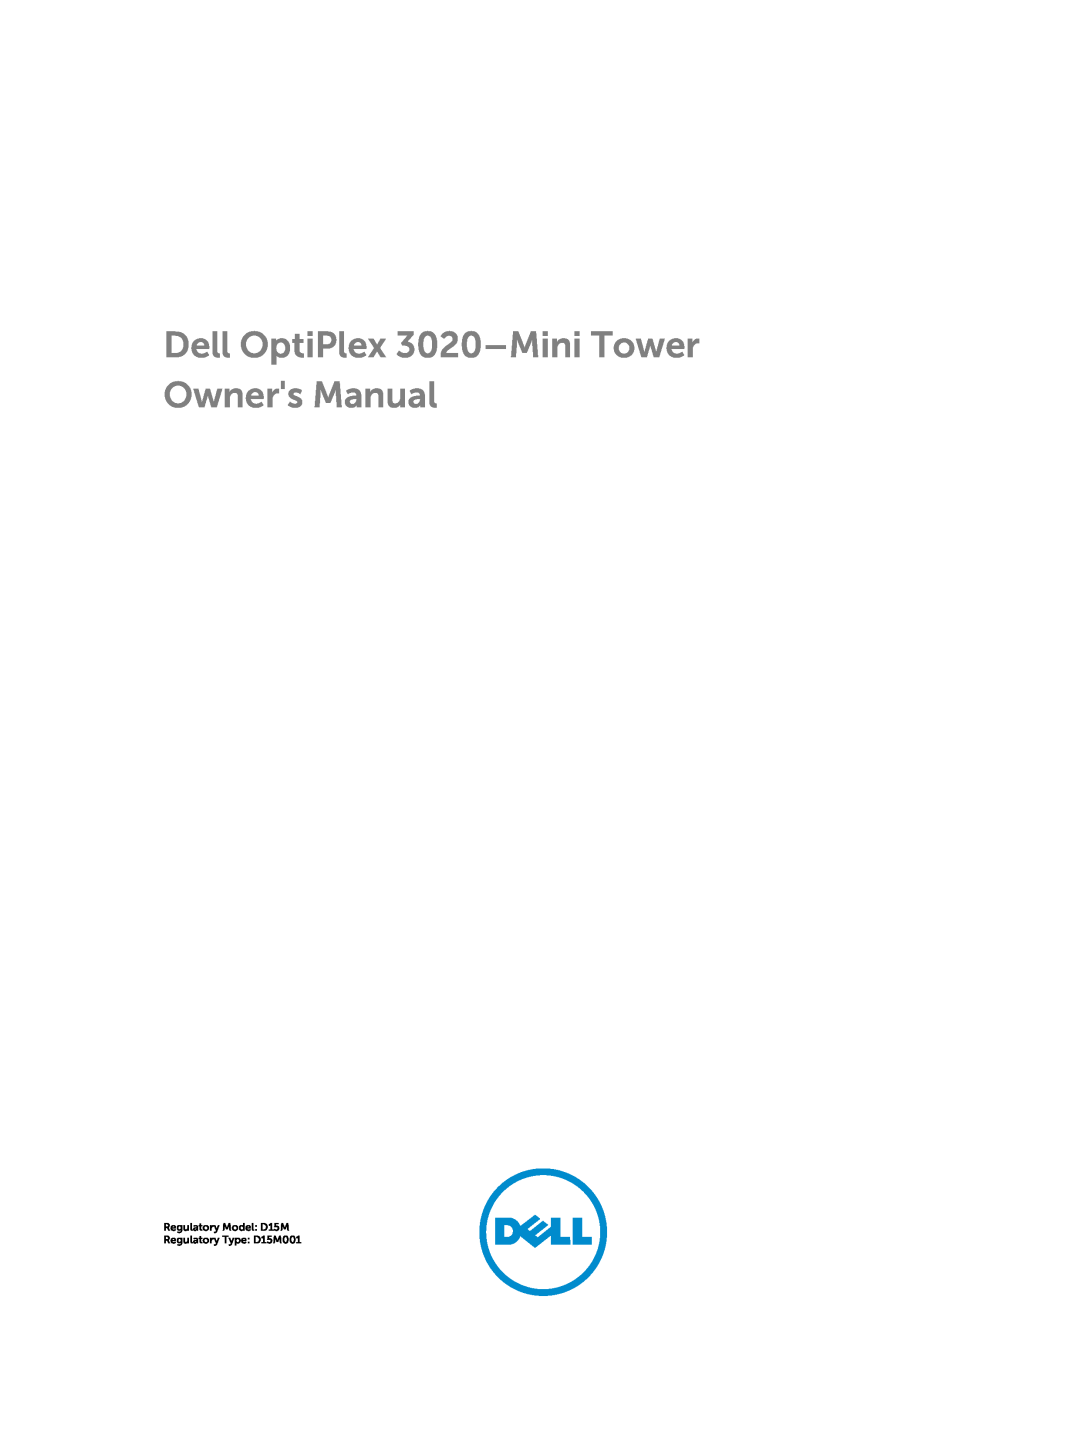 Dell owner manual Dell OptiPlex 3020-Mini Tower Owners Manual, Regulatory Model D15M Regulatory Type D15M001 